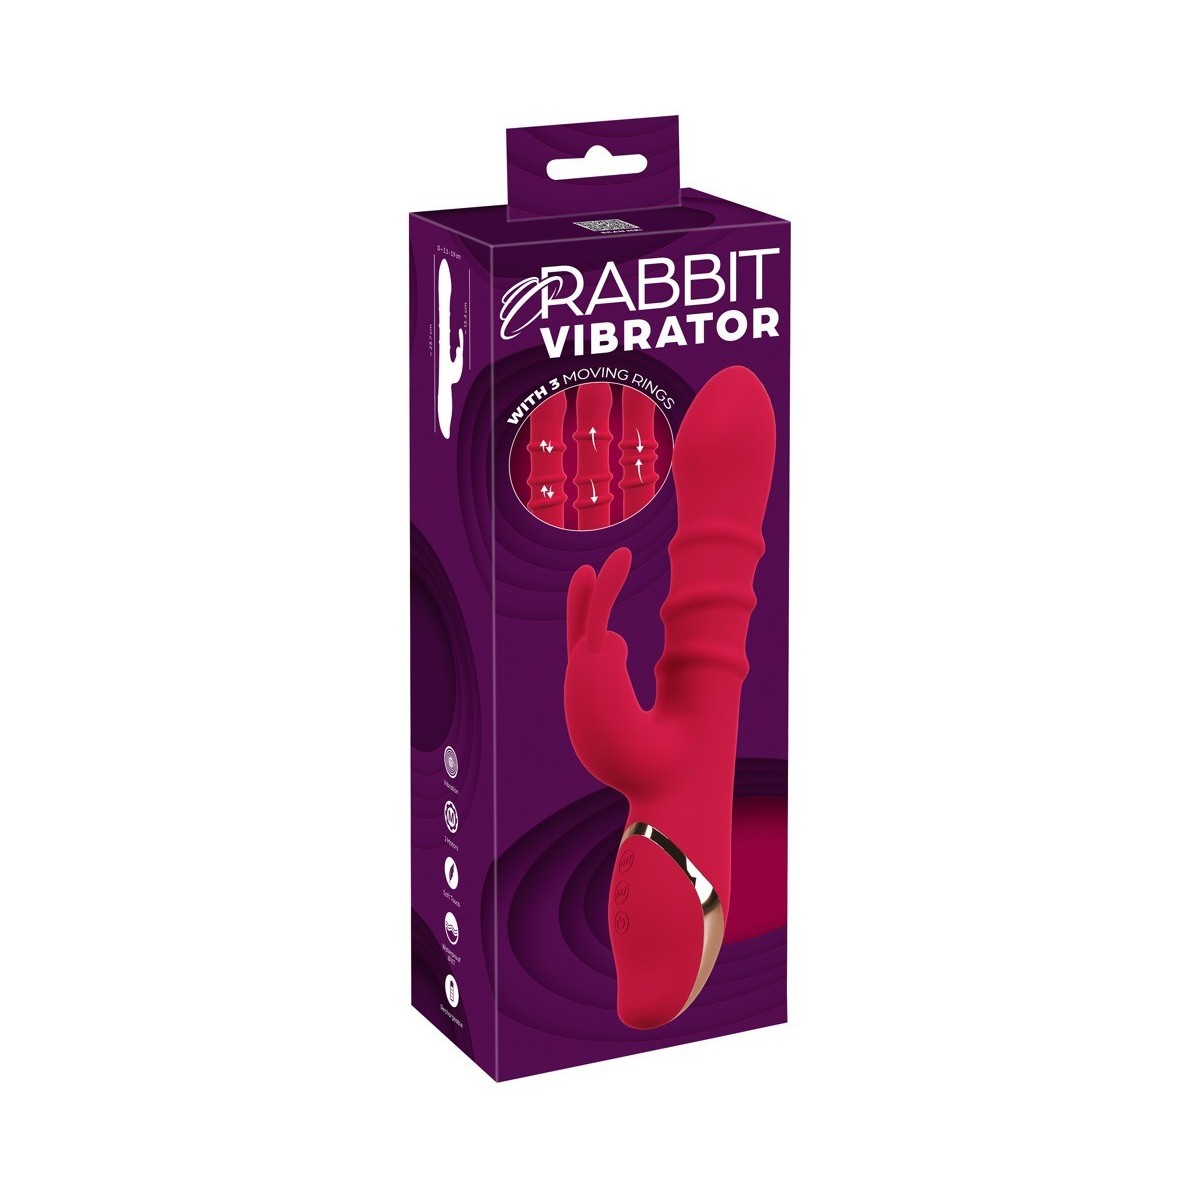 Vibratore vaginale Rabbit Vibrator with 3 Moving Rings